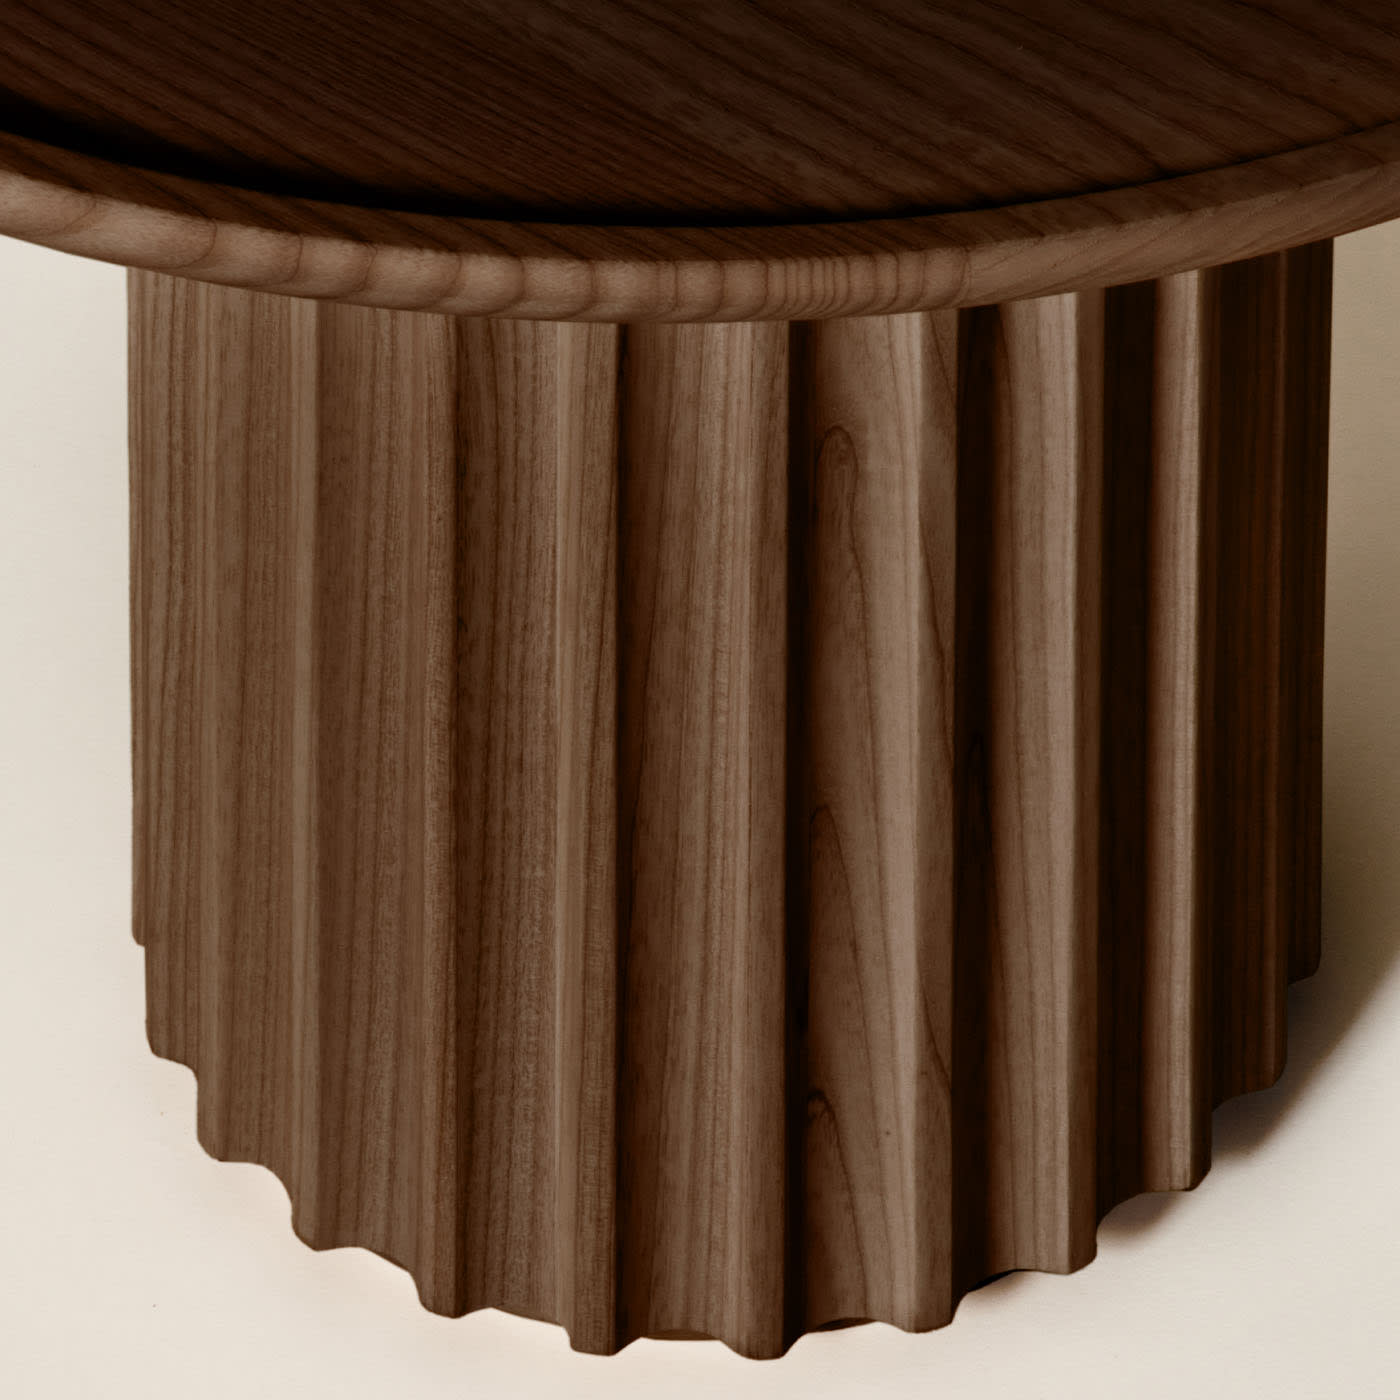 Capitello Brown Ash Coffee Table ☞ Dimensions: Ø 40 cm